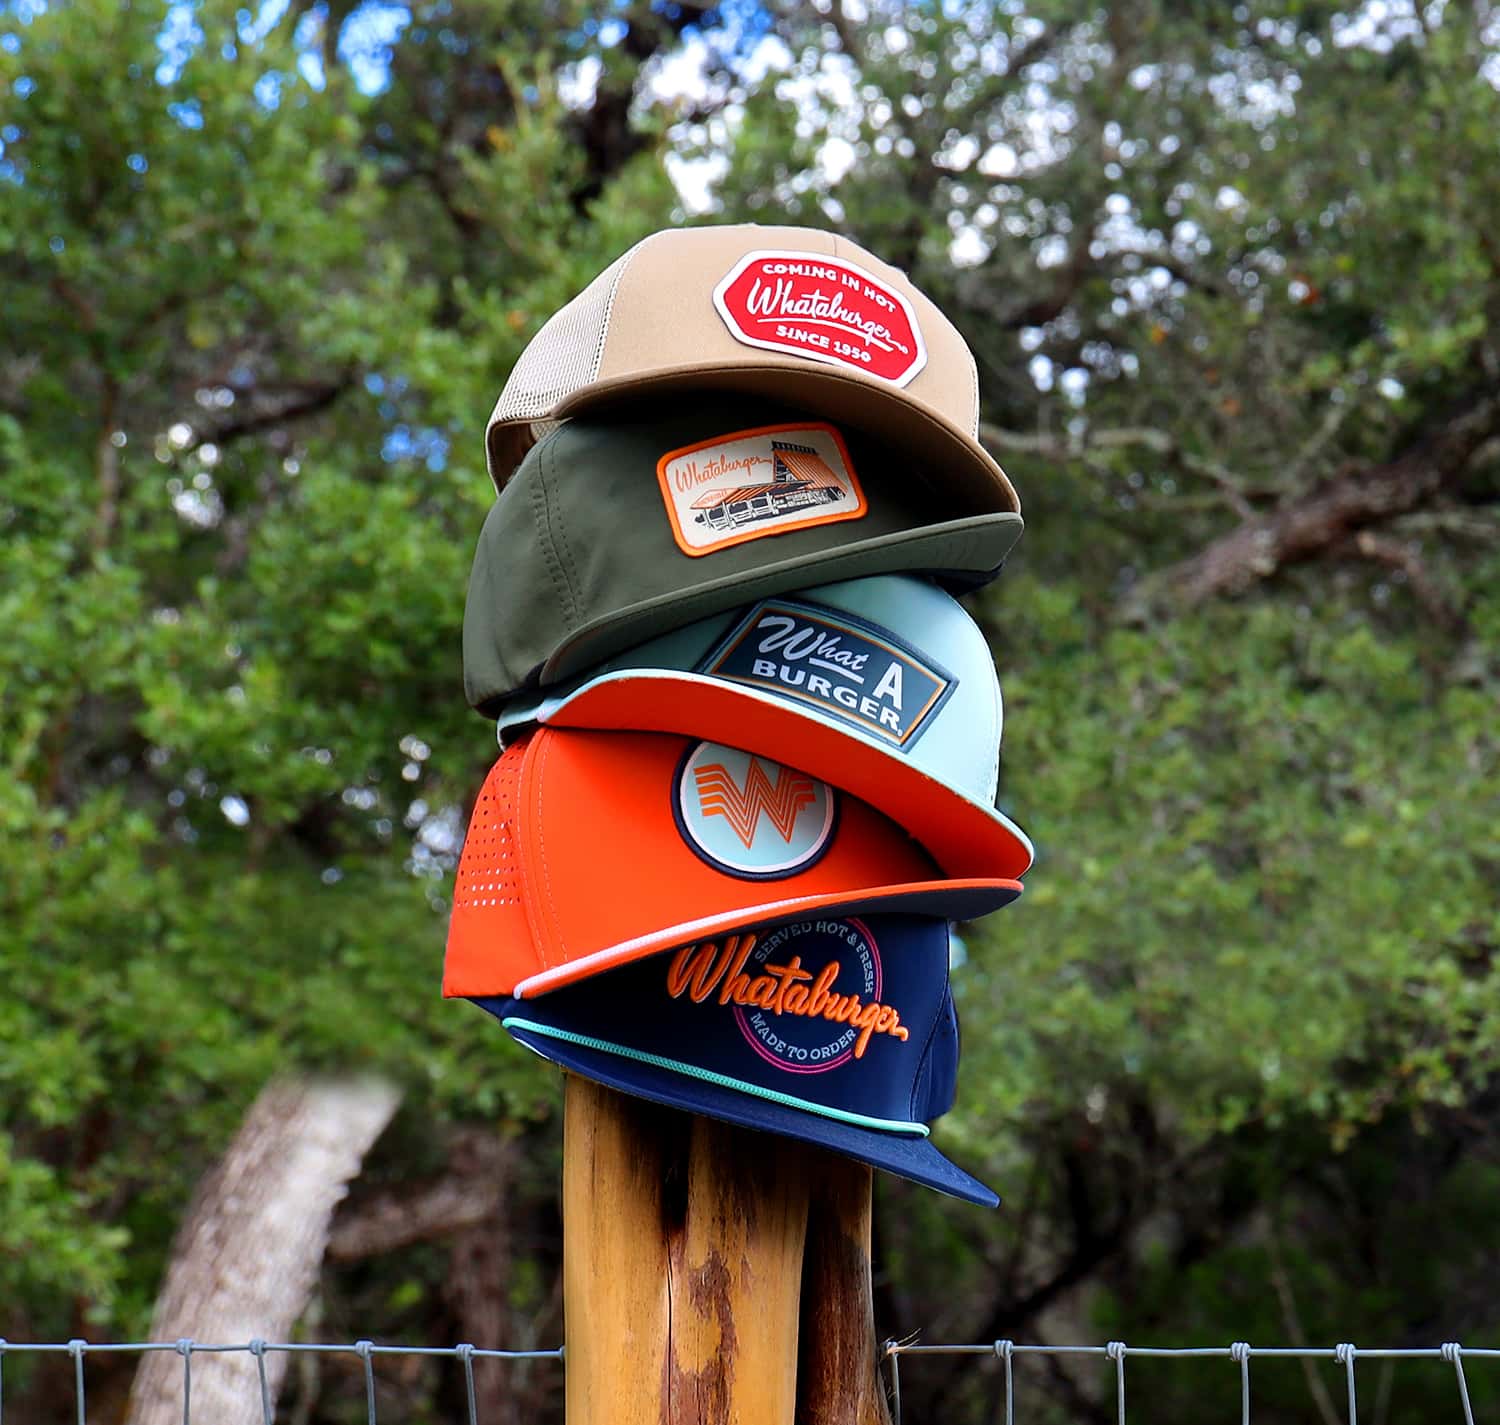 Whataburger hats stacked